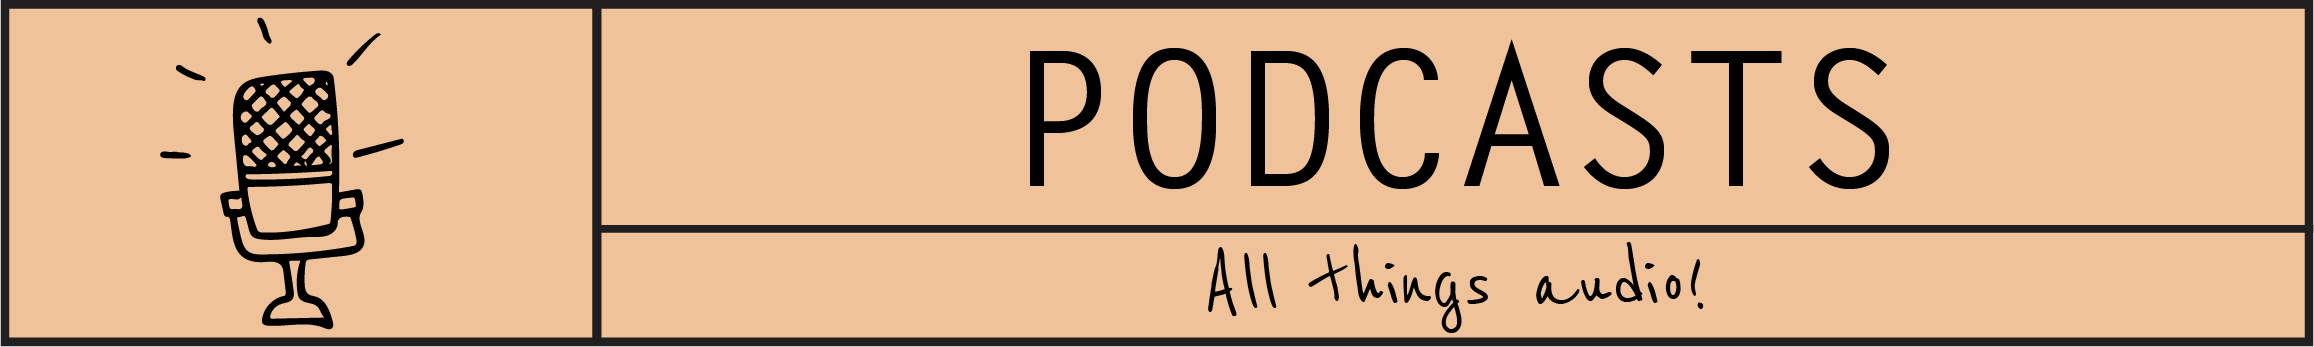 Podcasts - Header